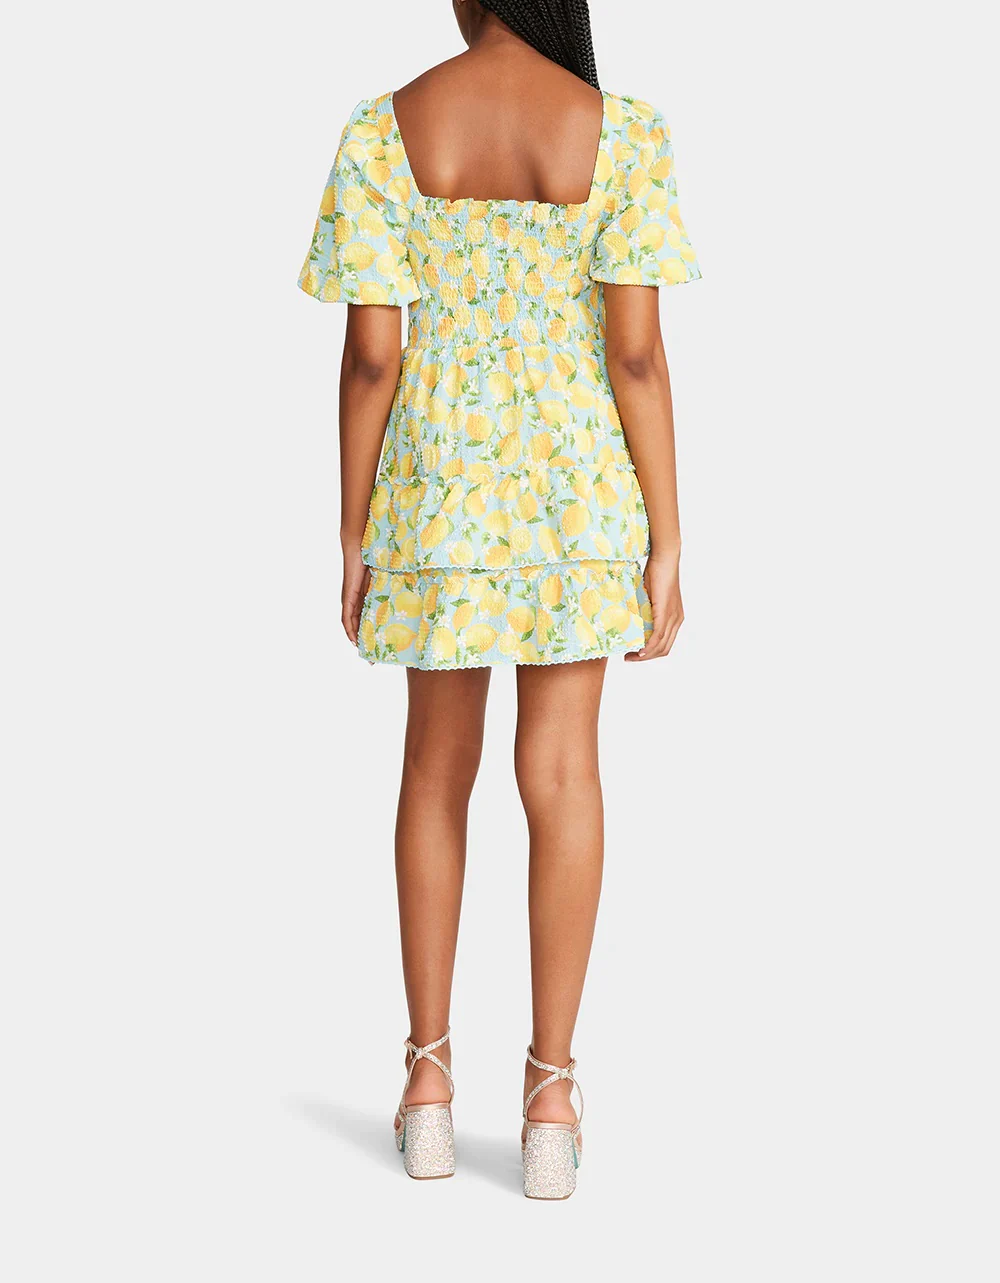 The Hayley Lemon Mini Dress